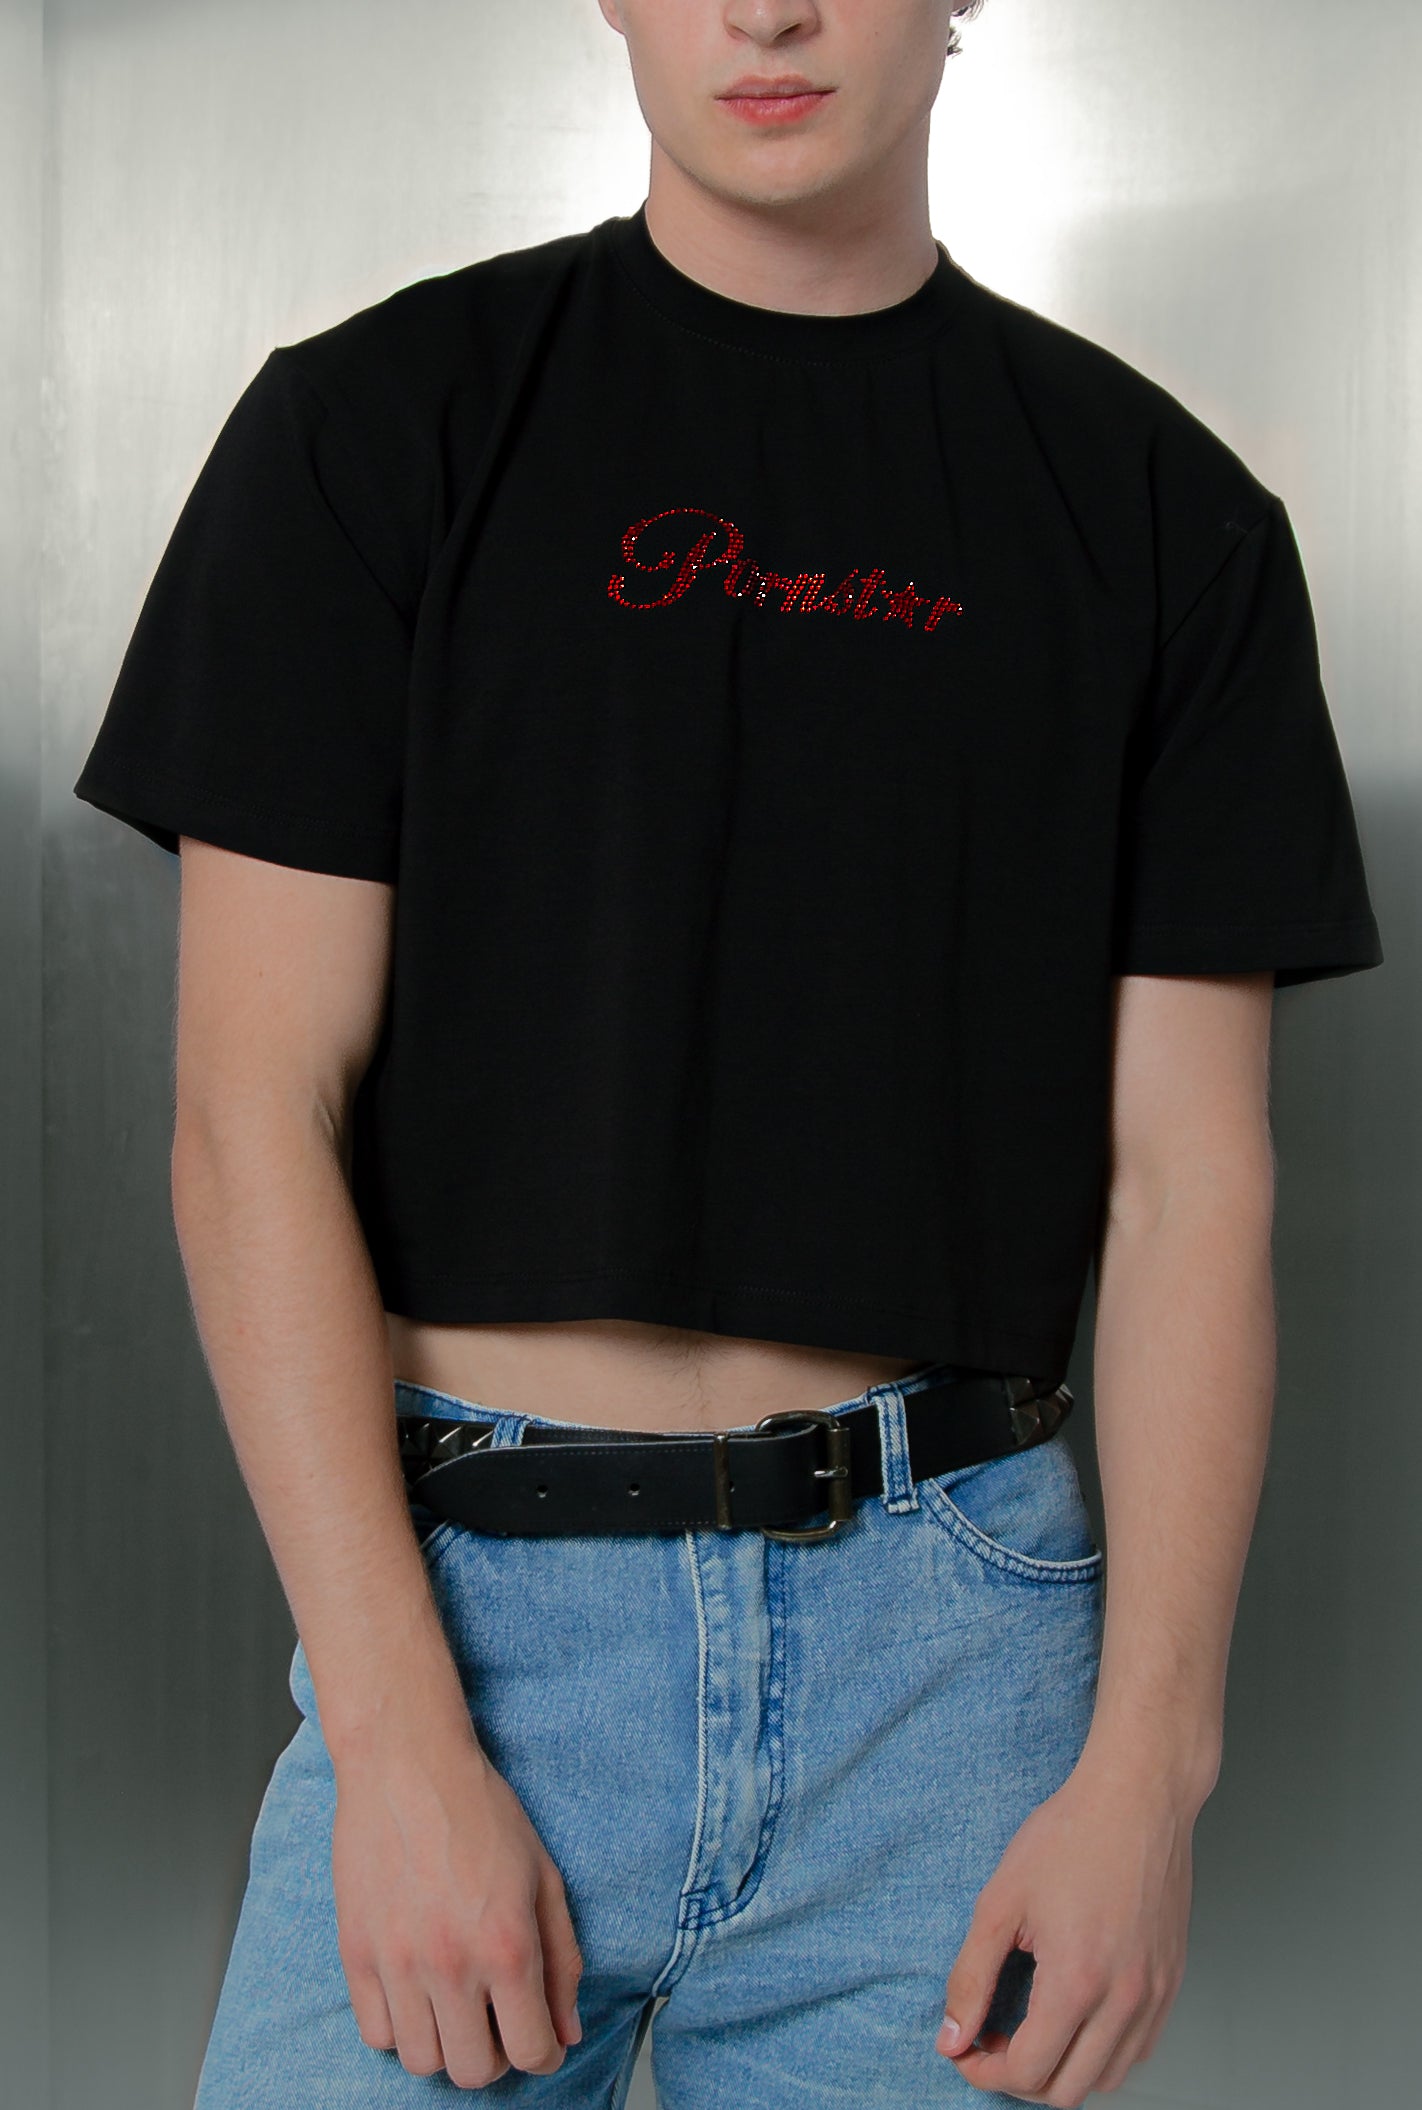 Pornstar t-shirt with red rhinestones